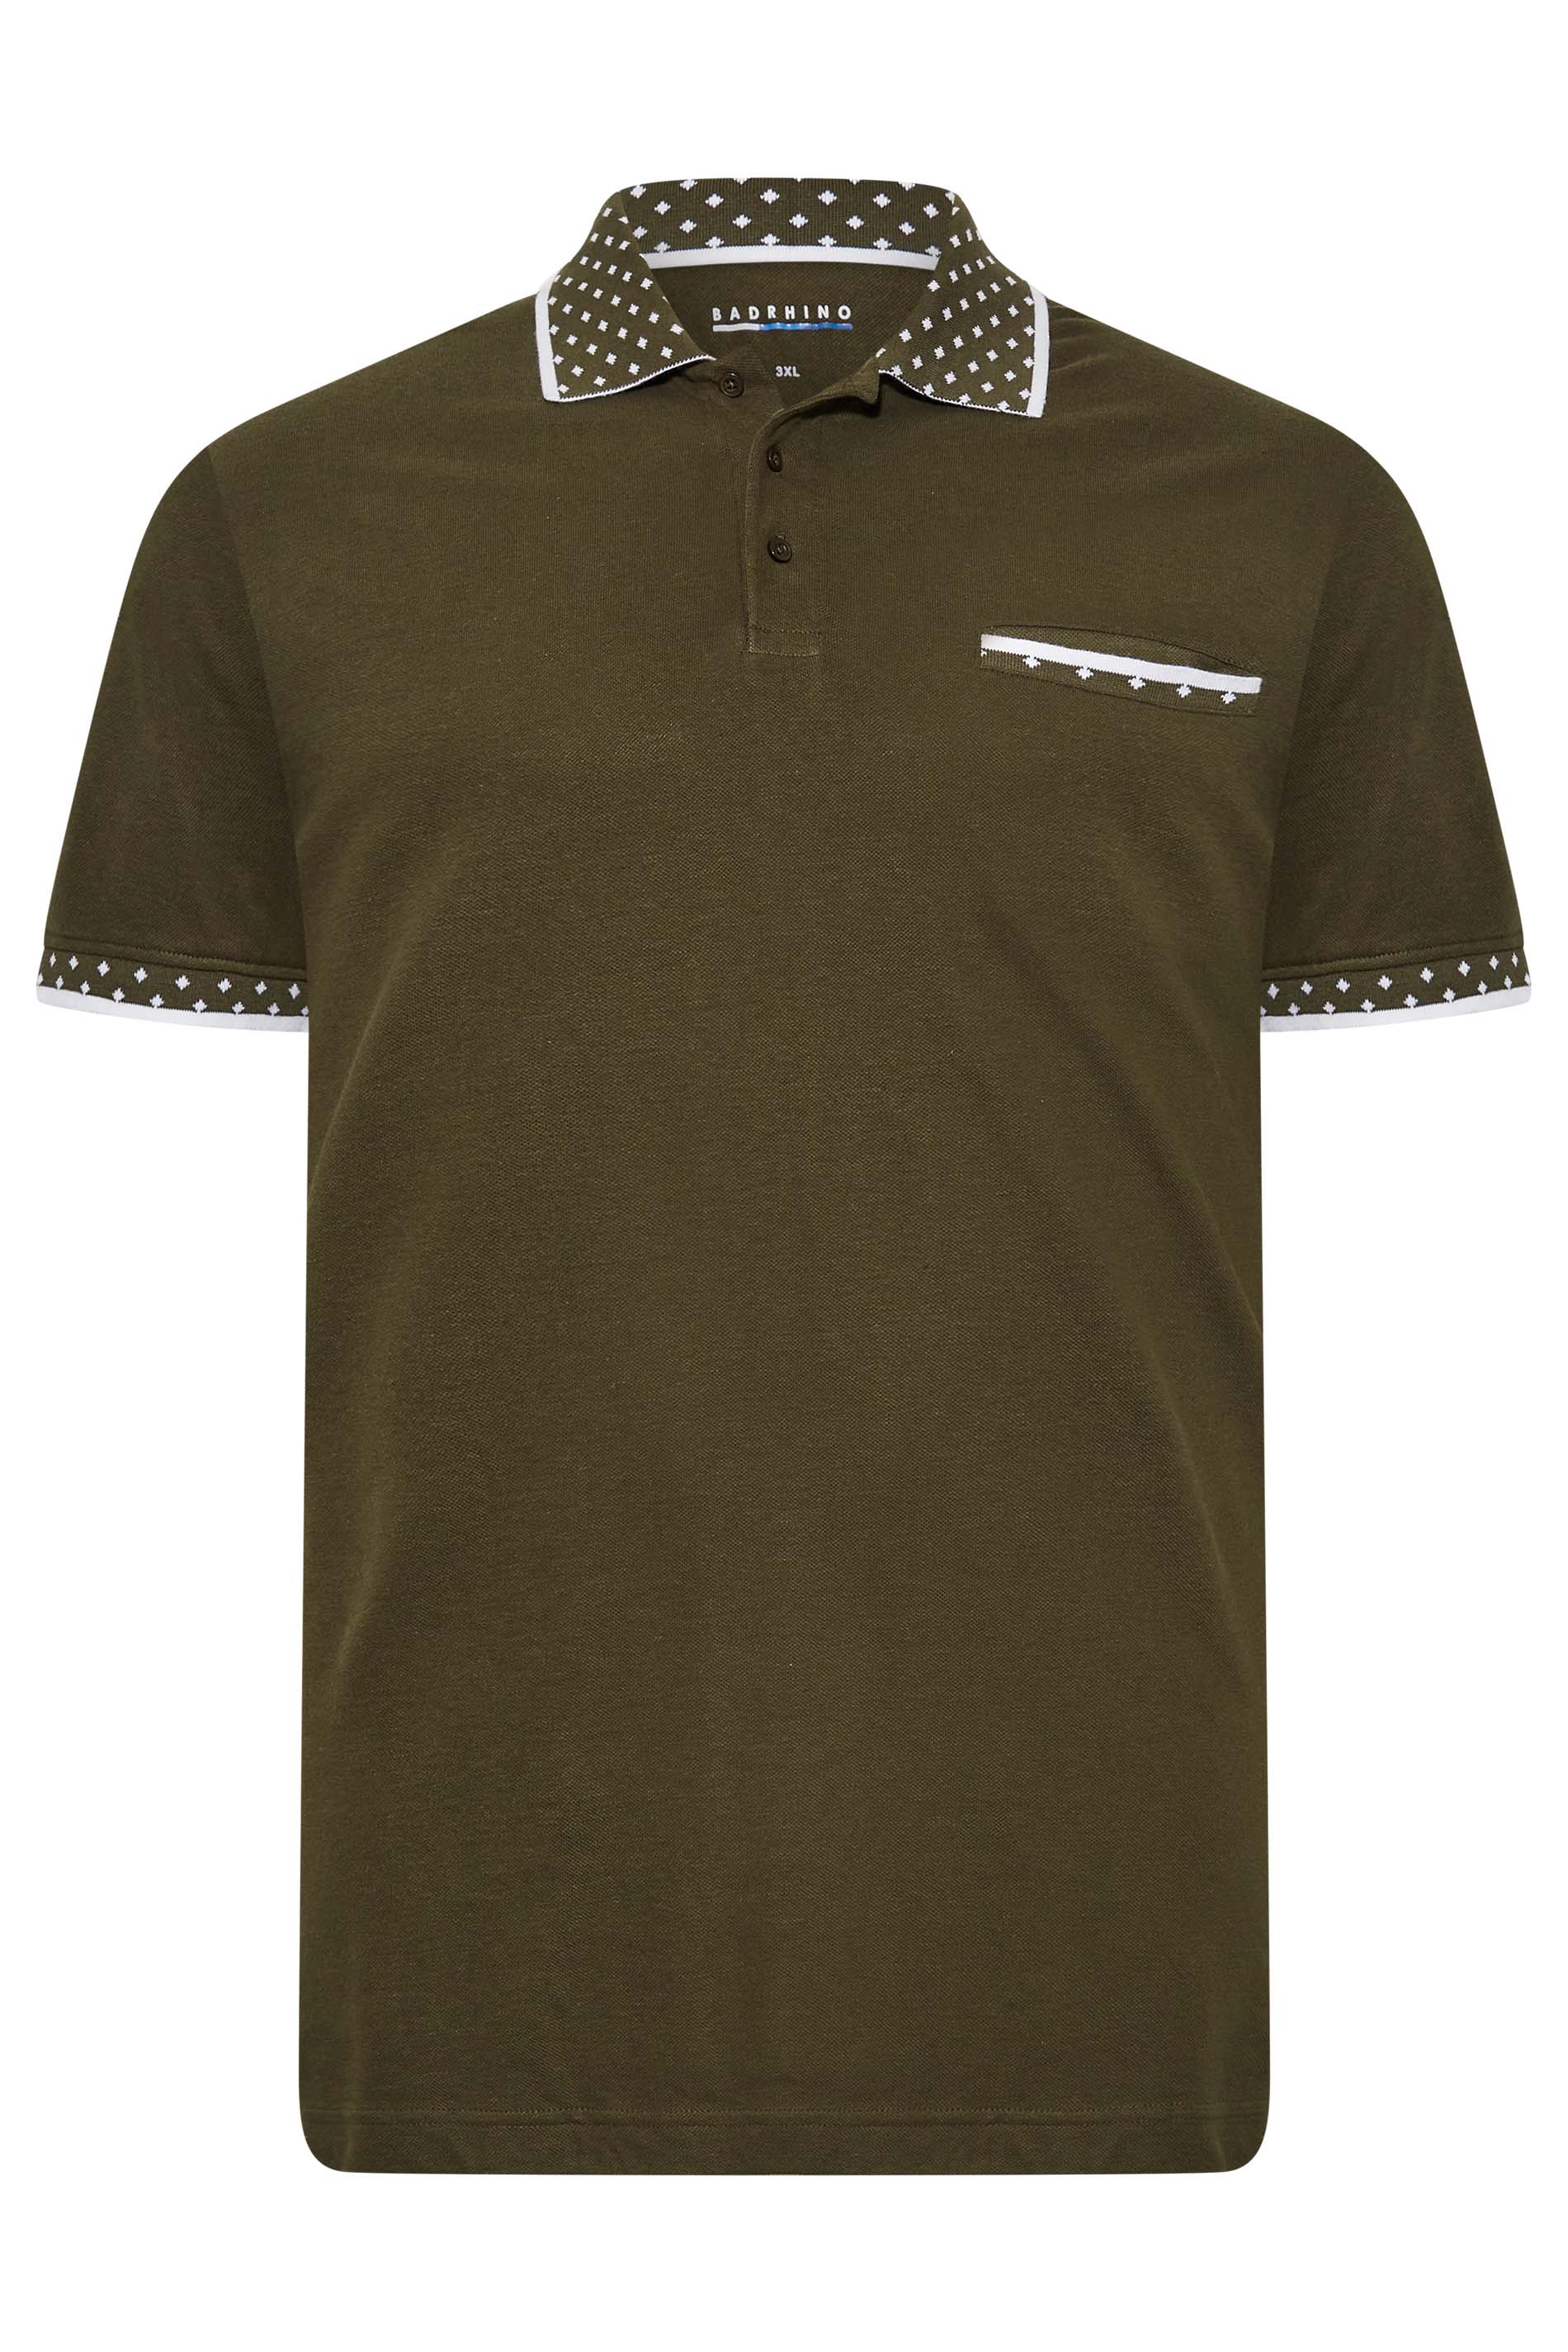 BadRhino Big & Tall Khaki Green Jacquard Collar Polo Shirt 1